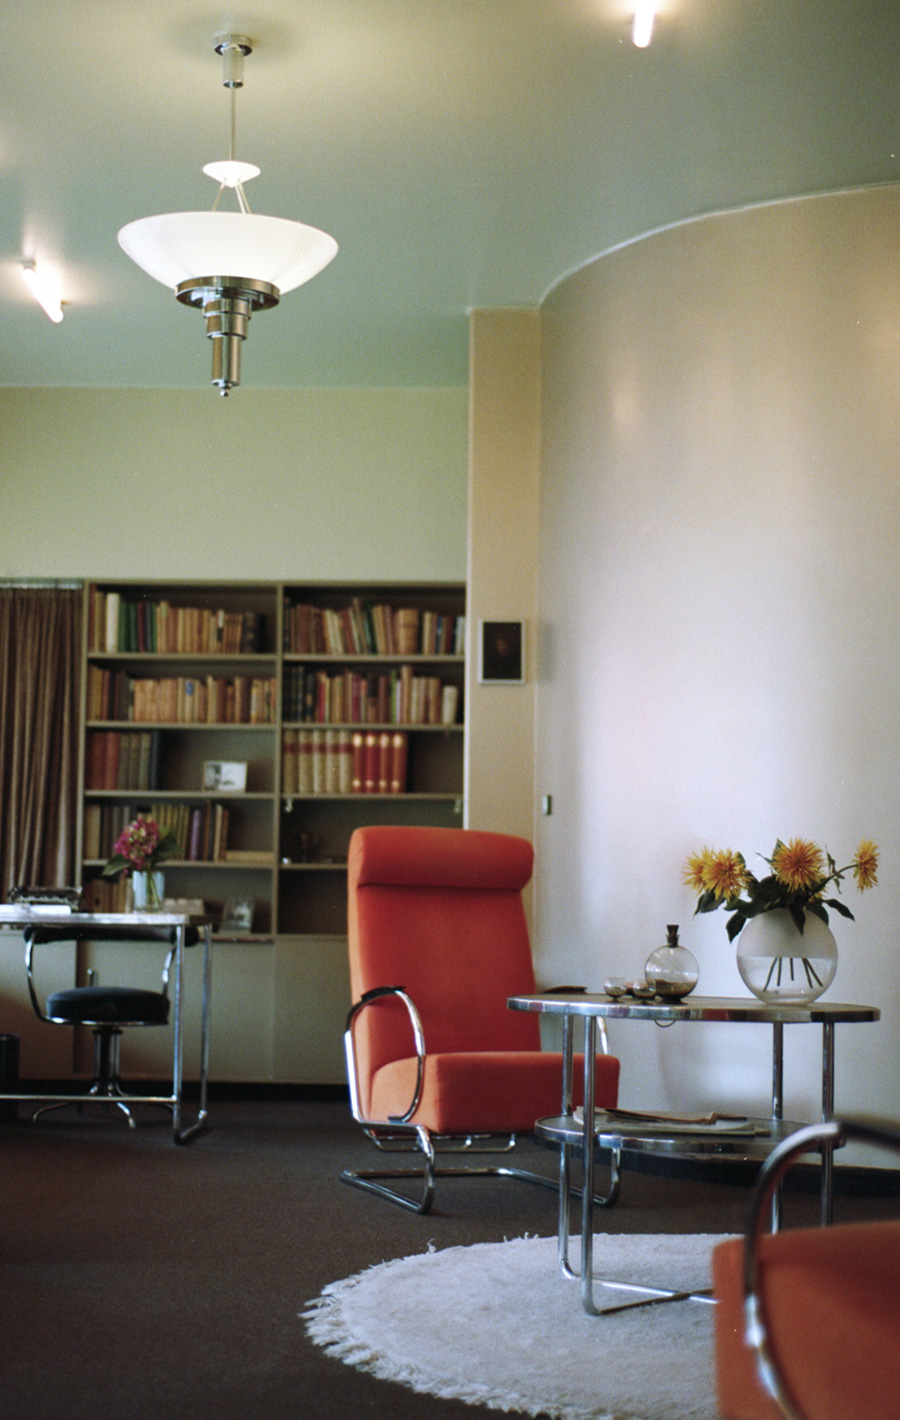 Huis Sonneveld Rotterdam analog interior architecture photography